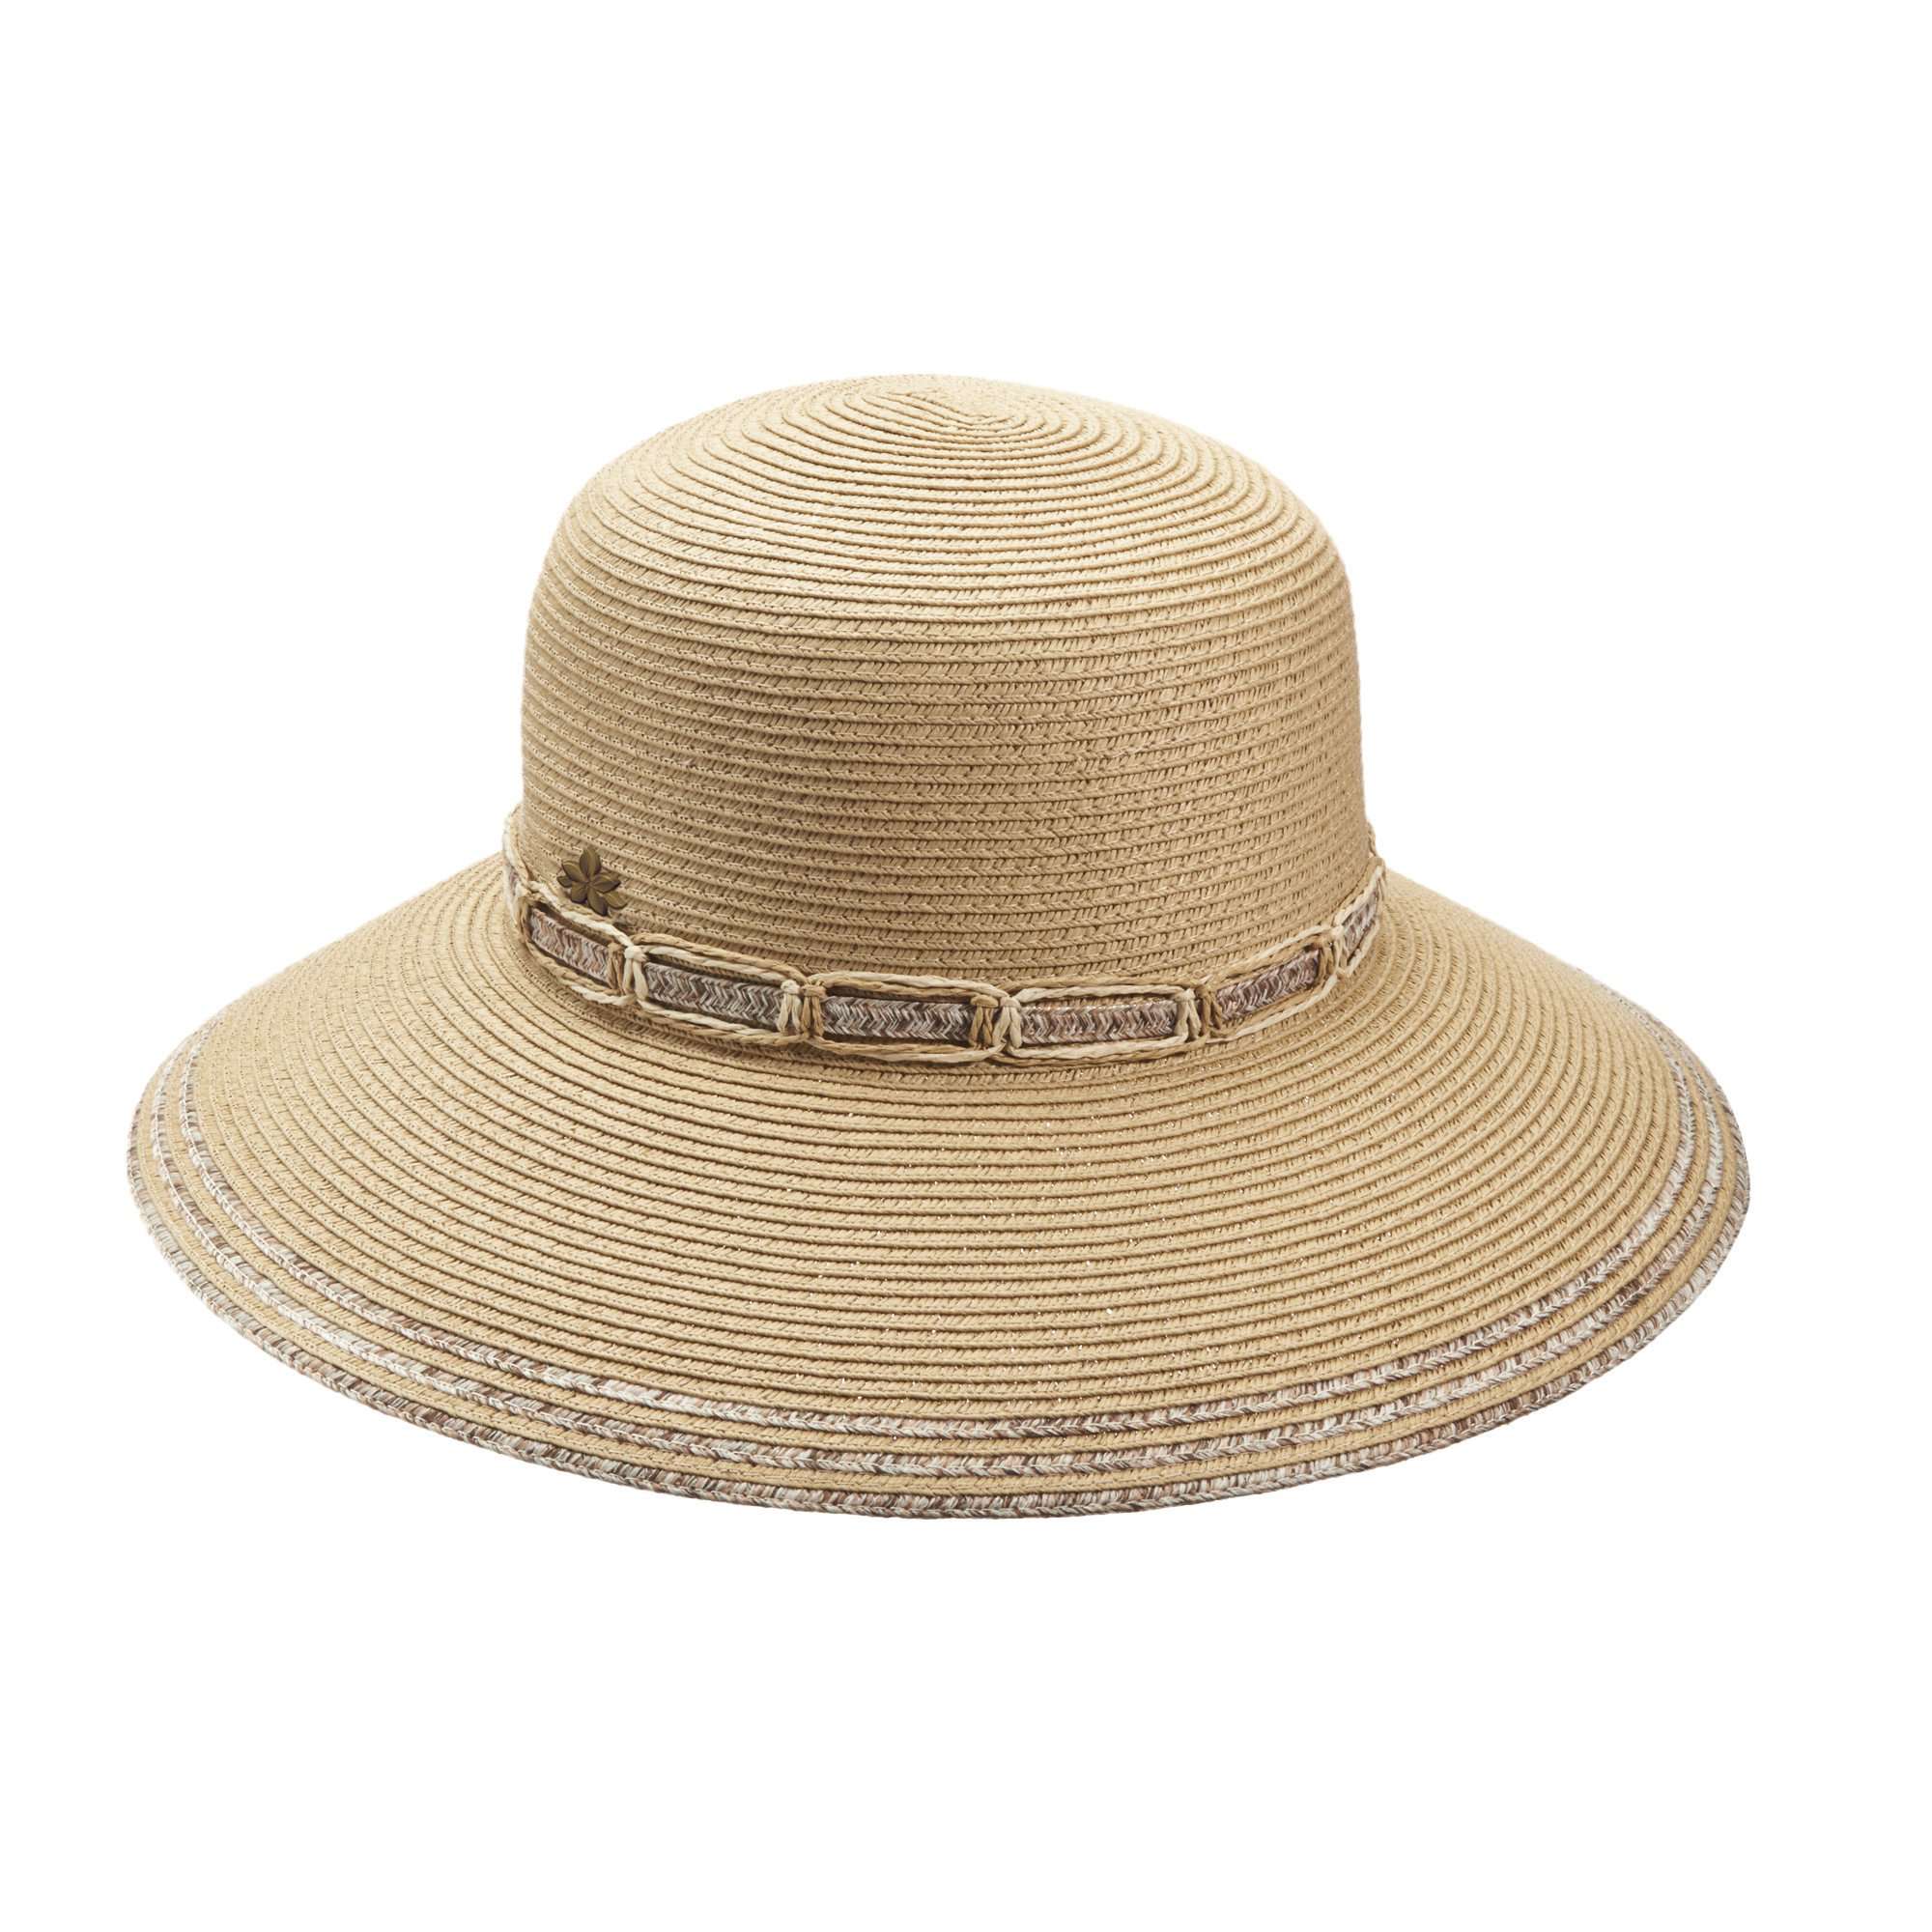 Big Brim Sun Hat with Raffia Detail - Cappelli Straworld Hats Wide Brim Sun Hat Cappelli Straworld csw296bc Butterscotch Medium (57 cm) 